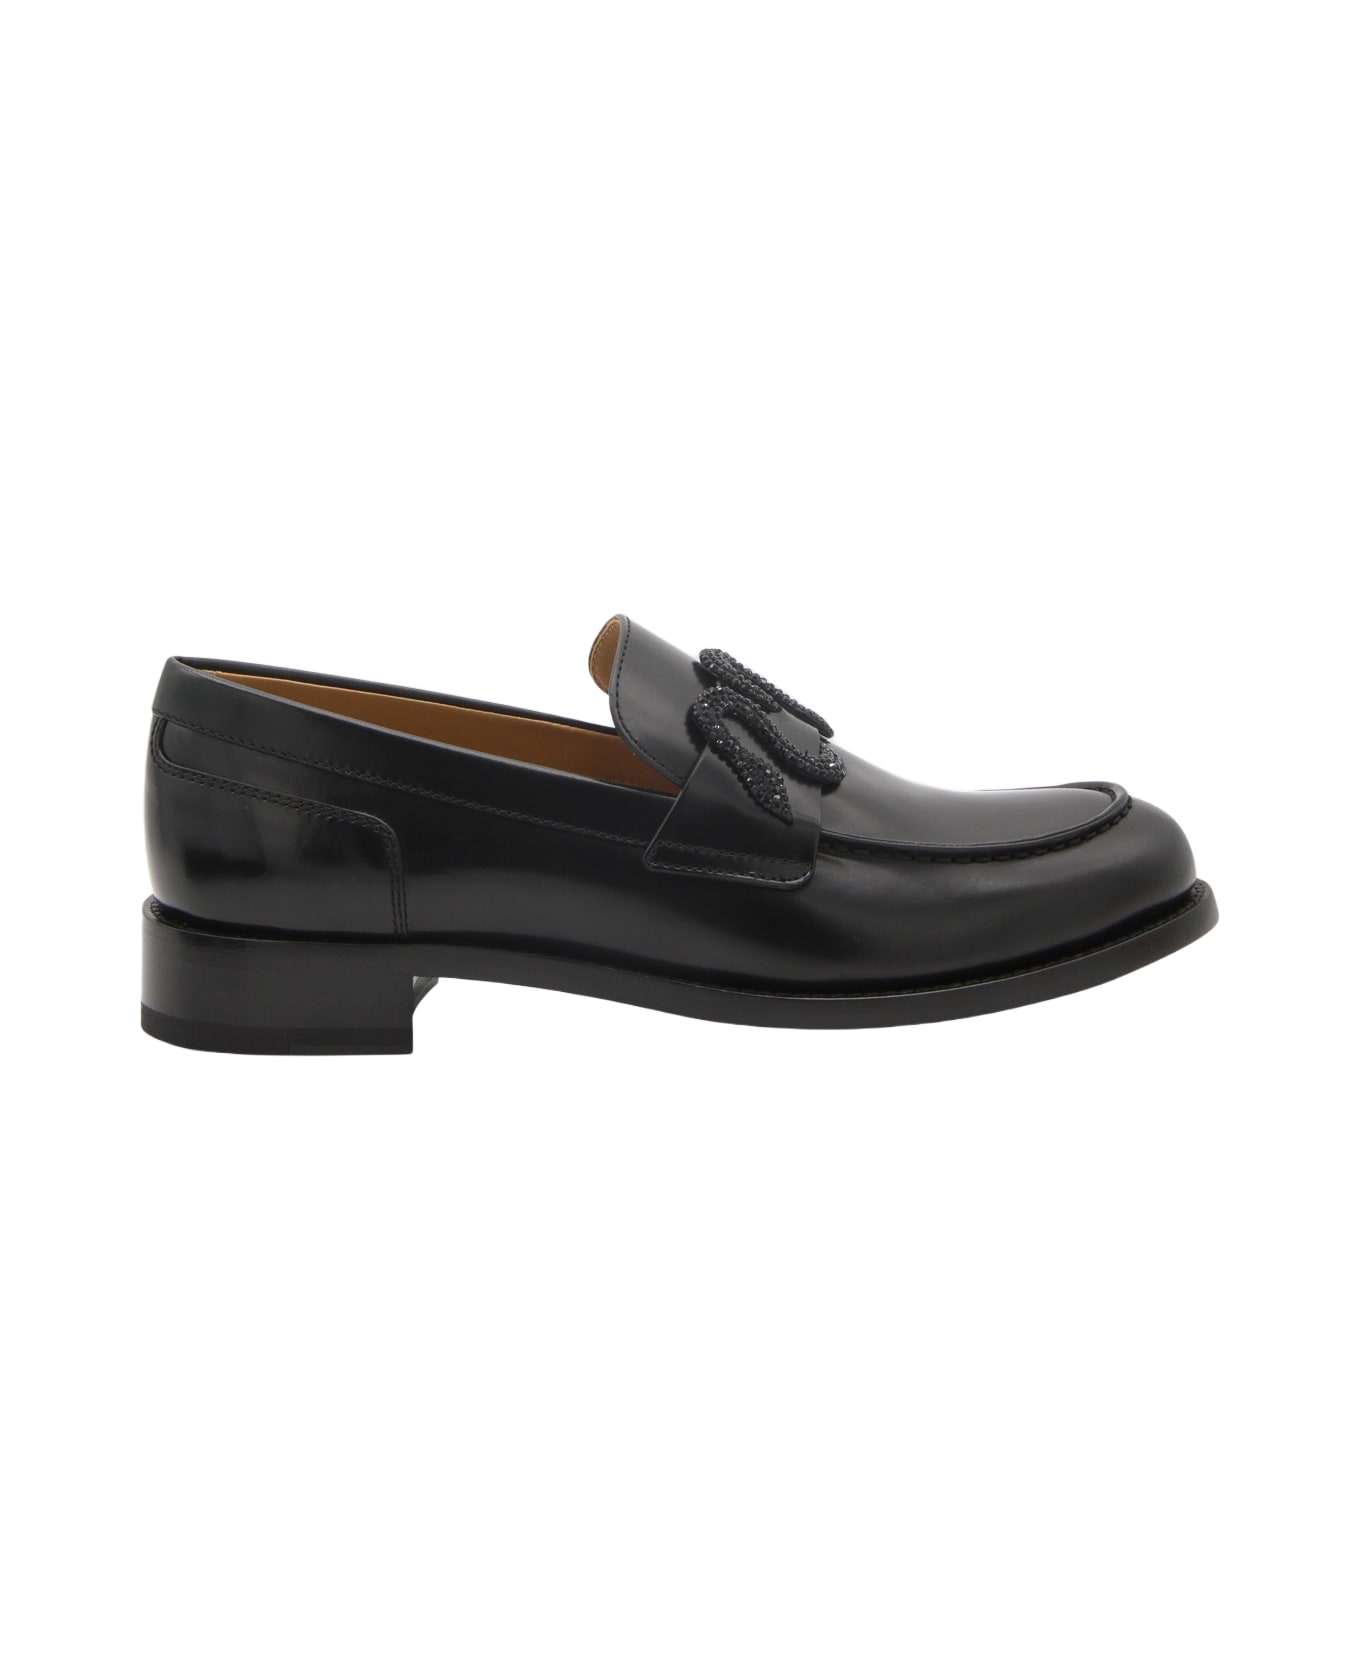 René Caovilla Black Leather Loafers - Black